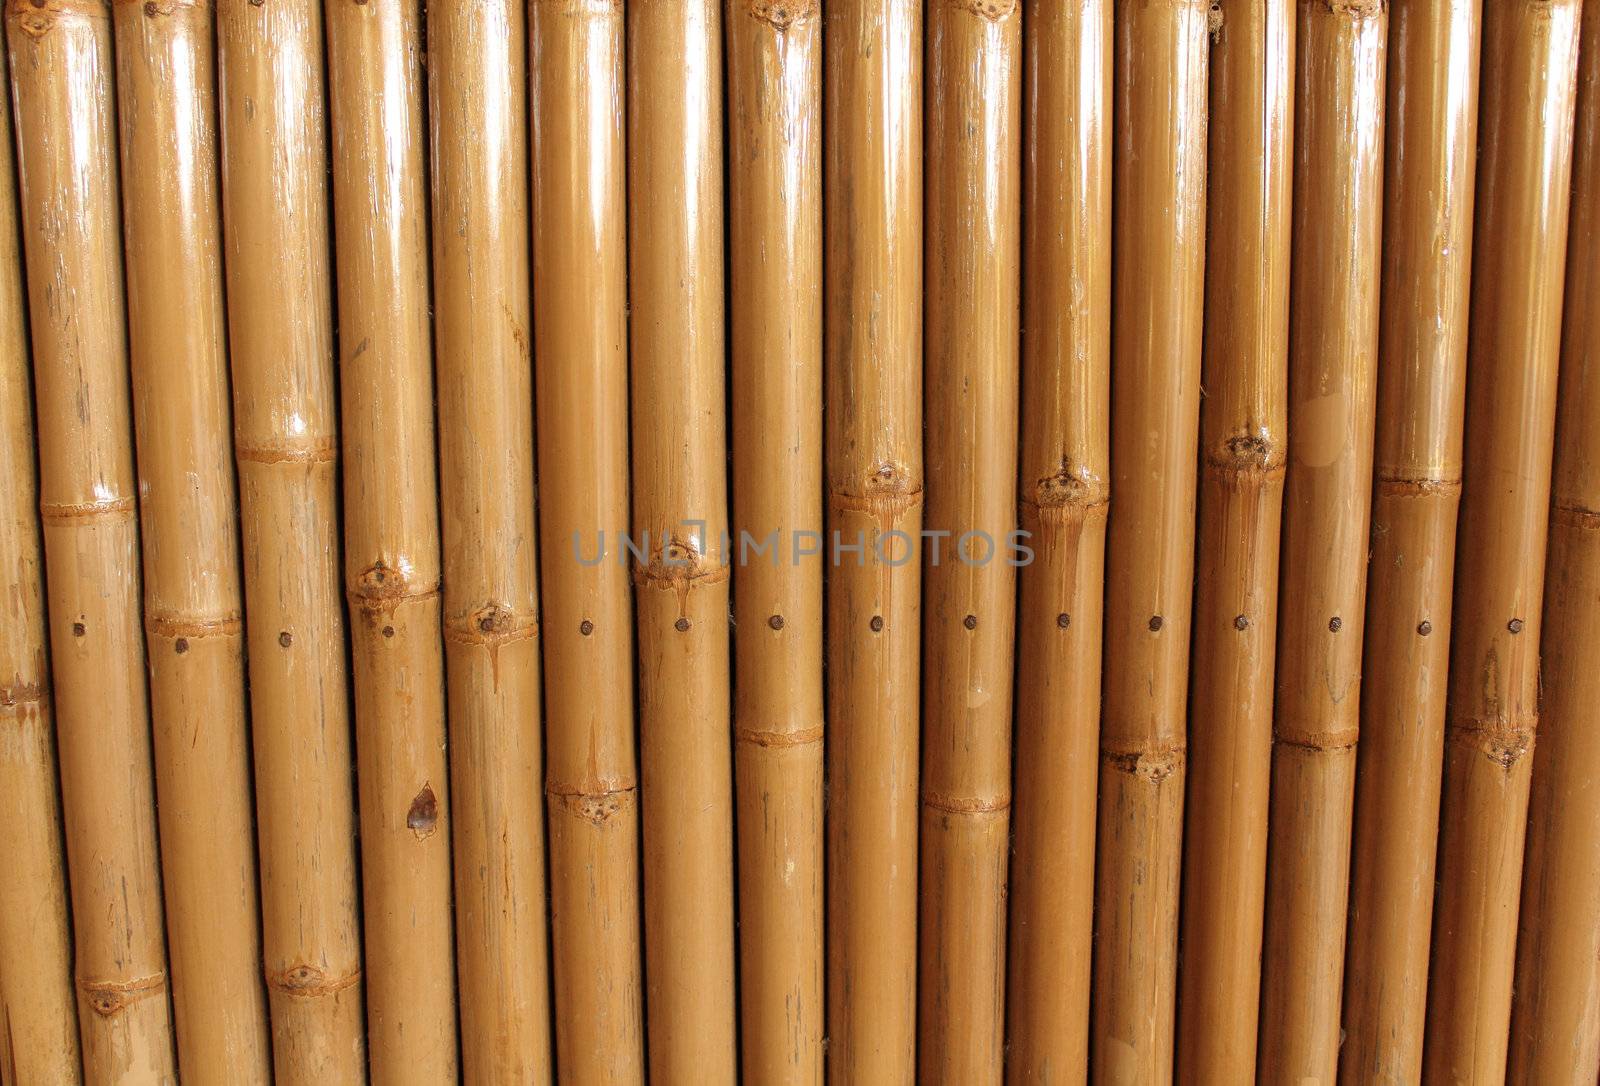 Bamboo wall by olovedog